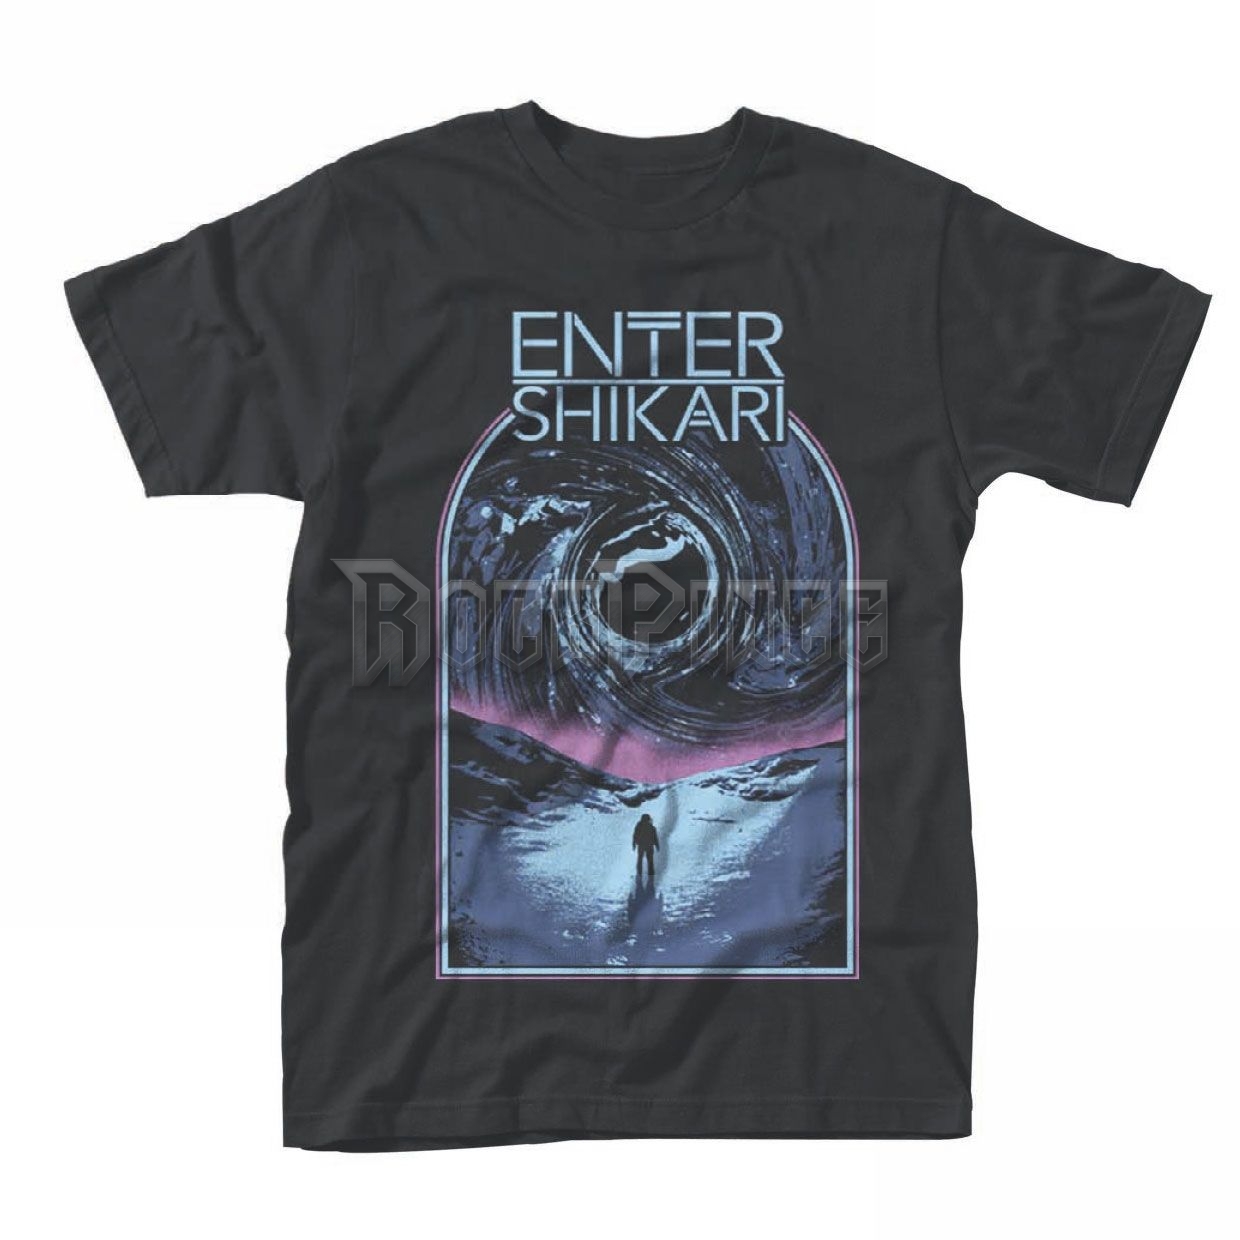 ENTER SHIKARI - SKY BREAK - PH10053